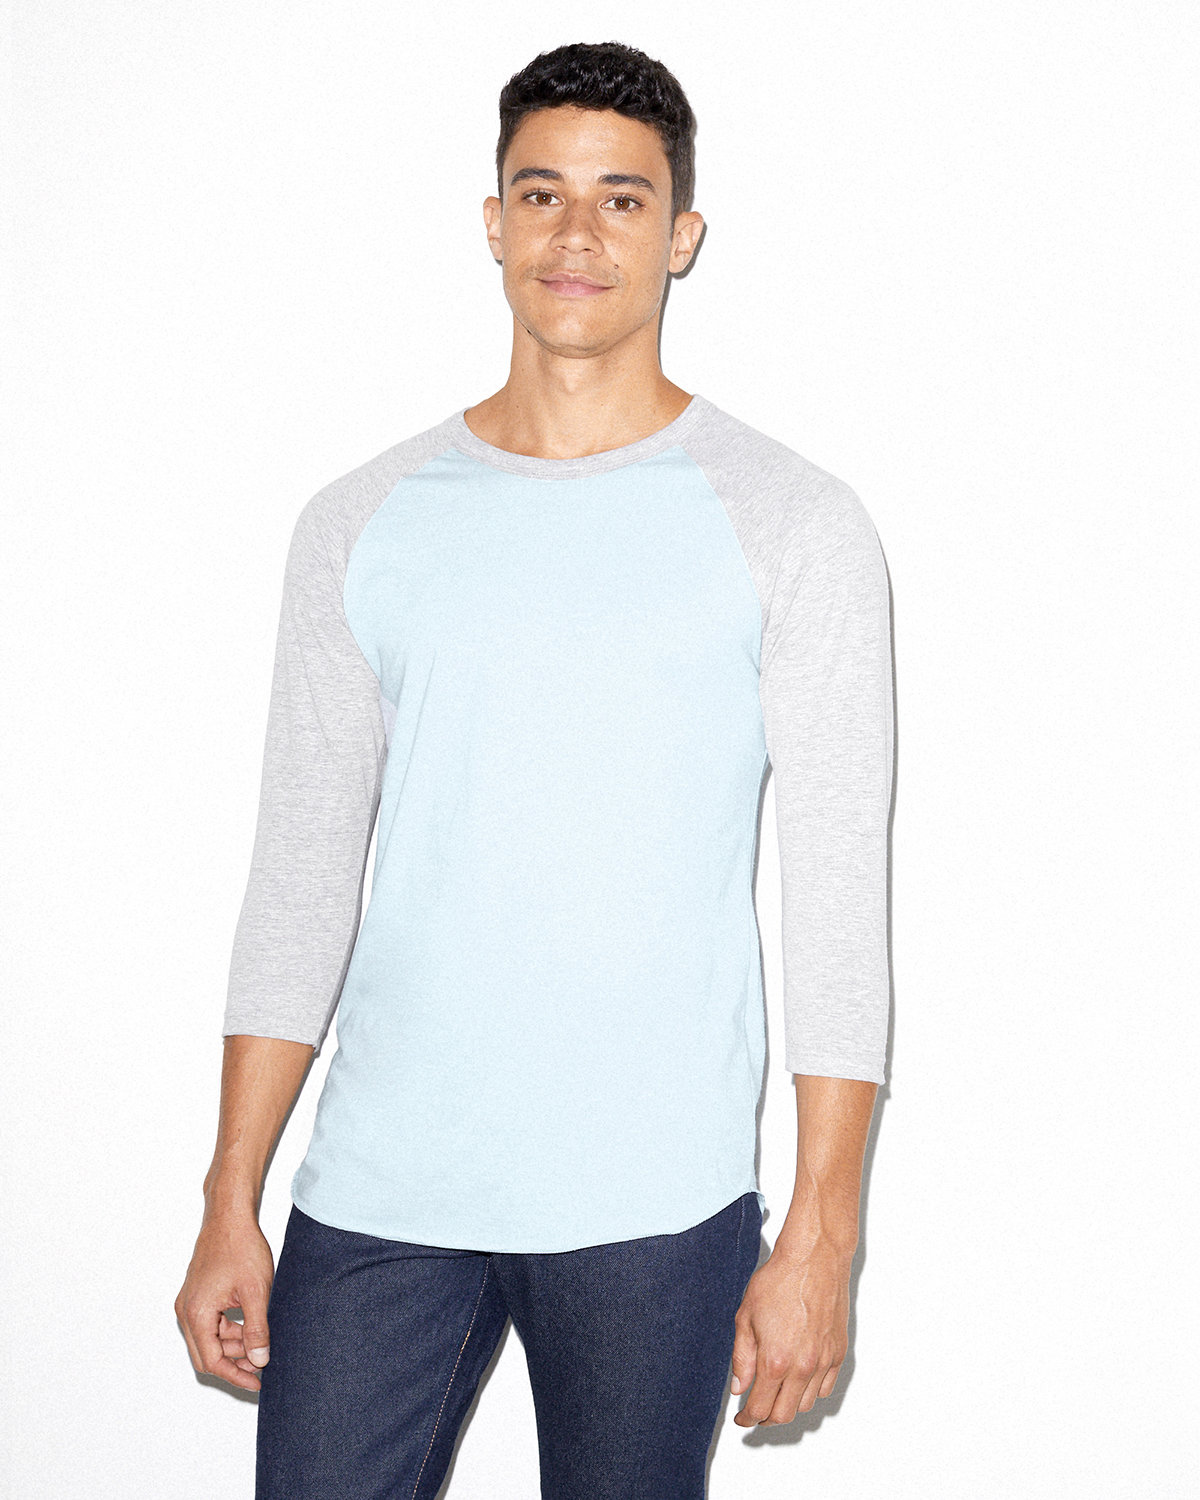 American Apparel Unisex Poly-Cotton 3/4-Sleeve Raglan T-Shirt LT BLUE/ HTH GRY 